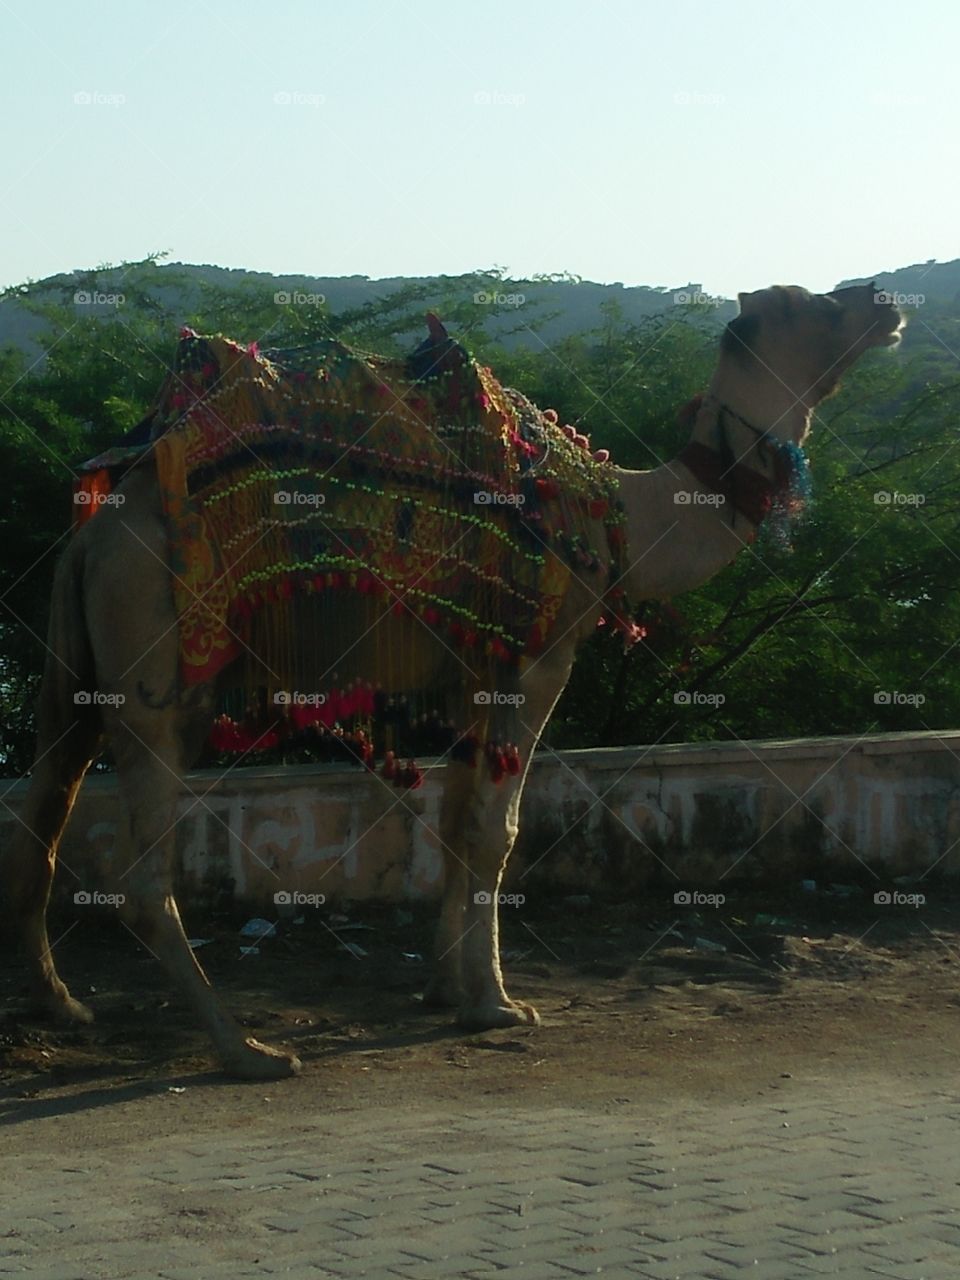 🐪 camel  in Rajasthan